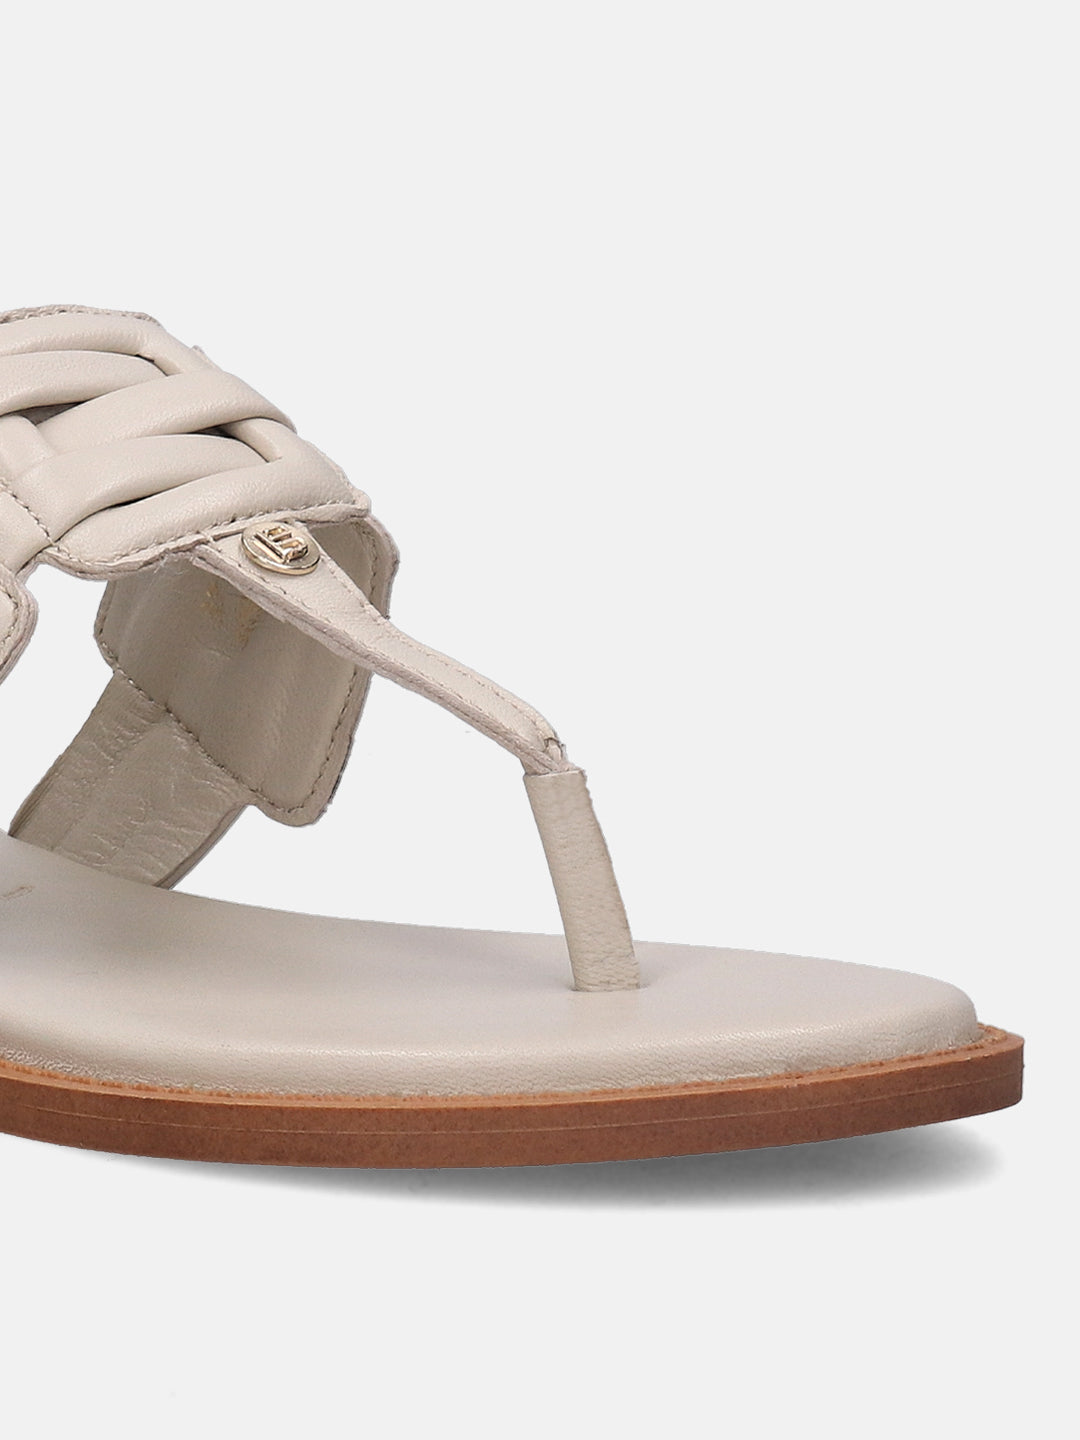 BAGATT Premium Leather Offwhite Thongs Sandals